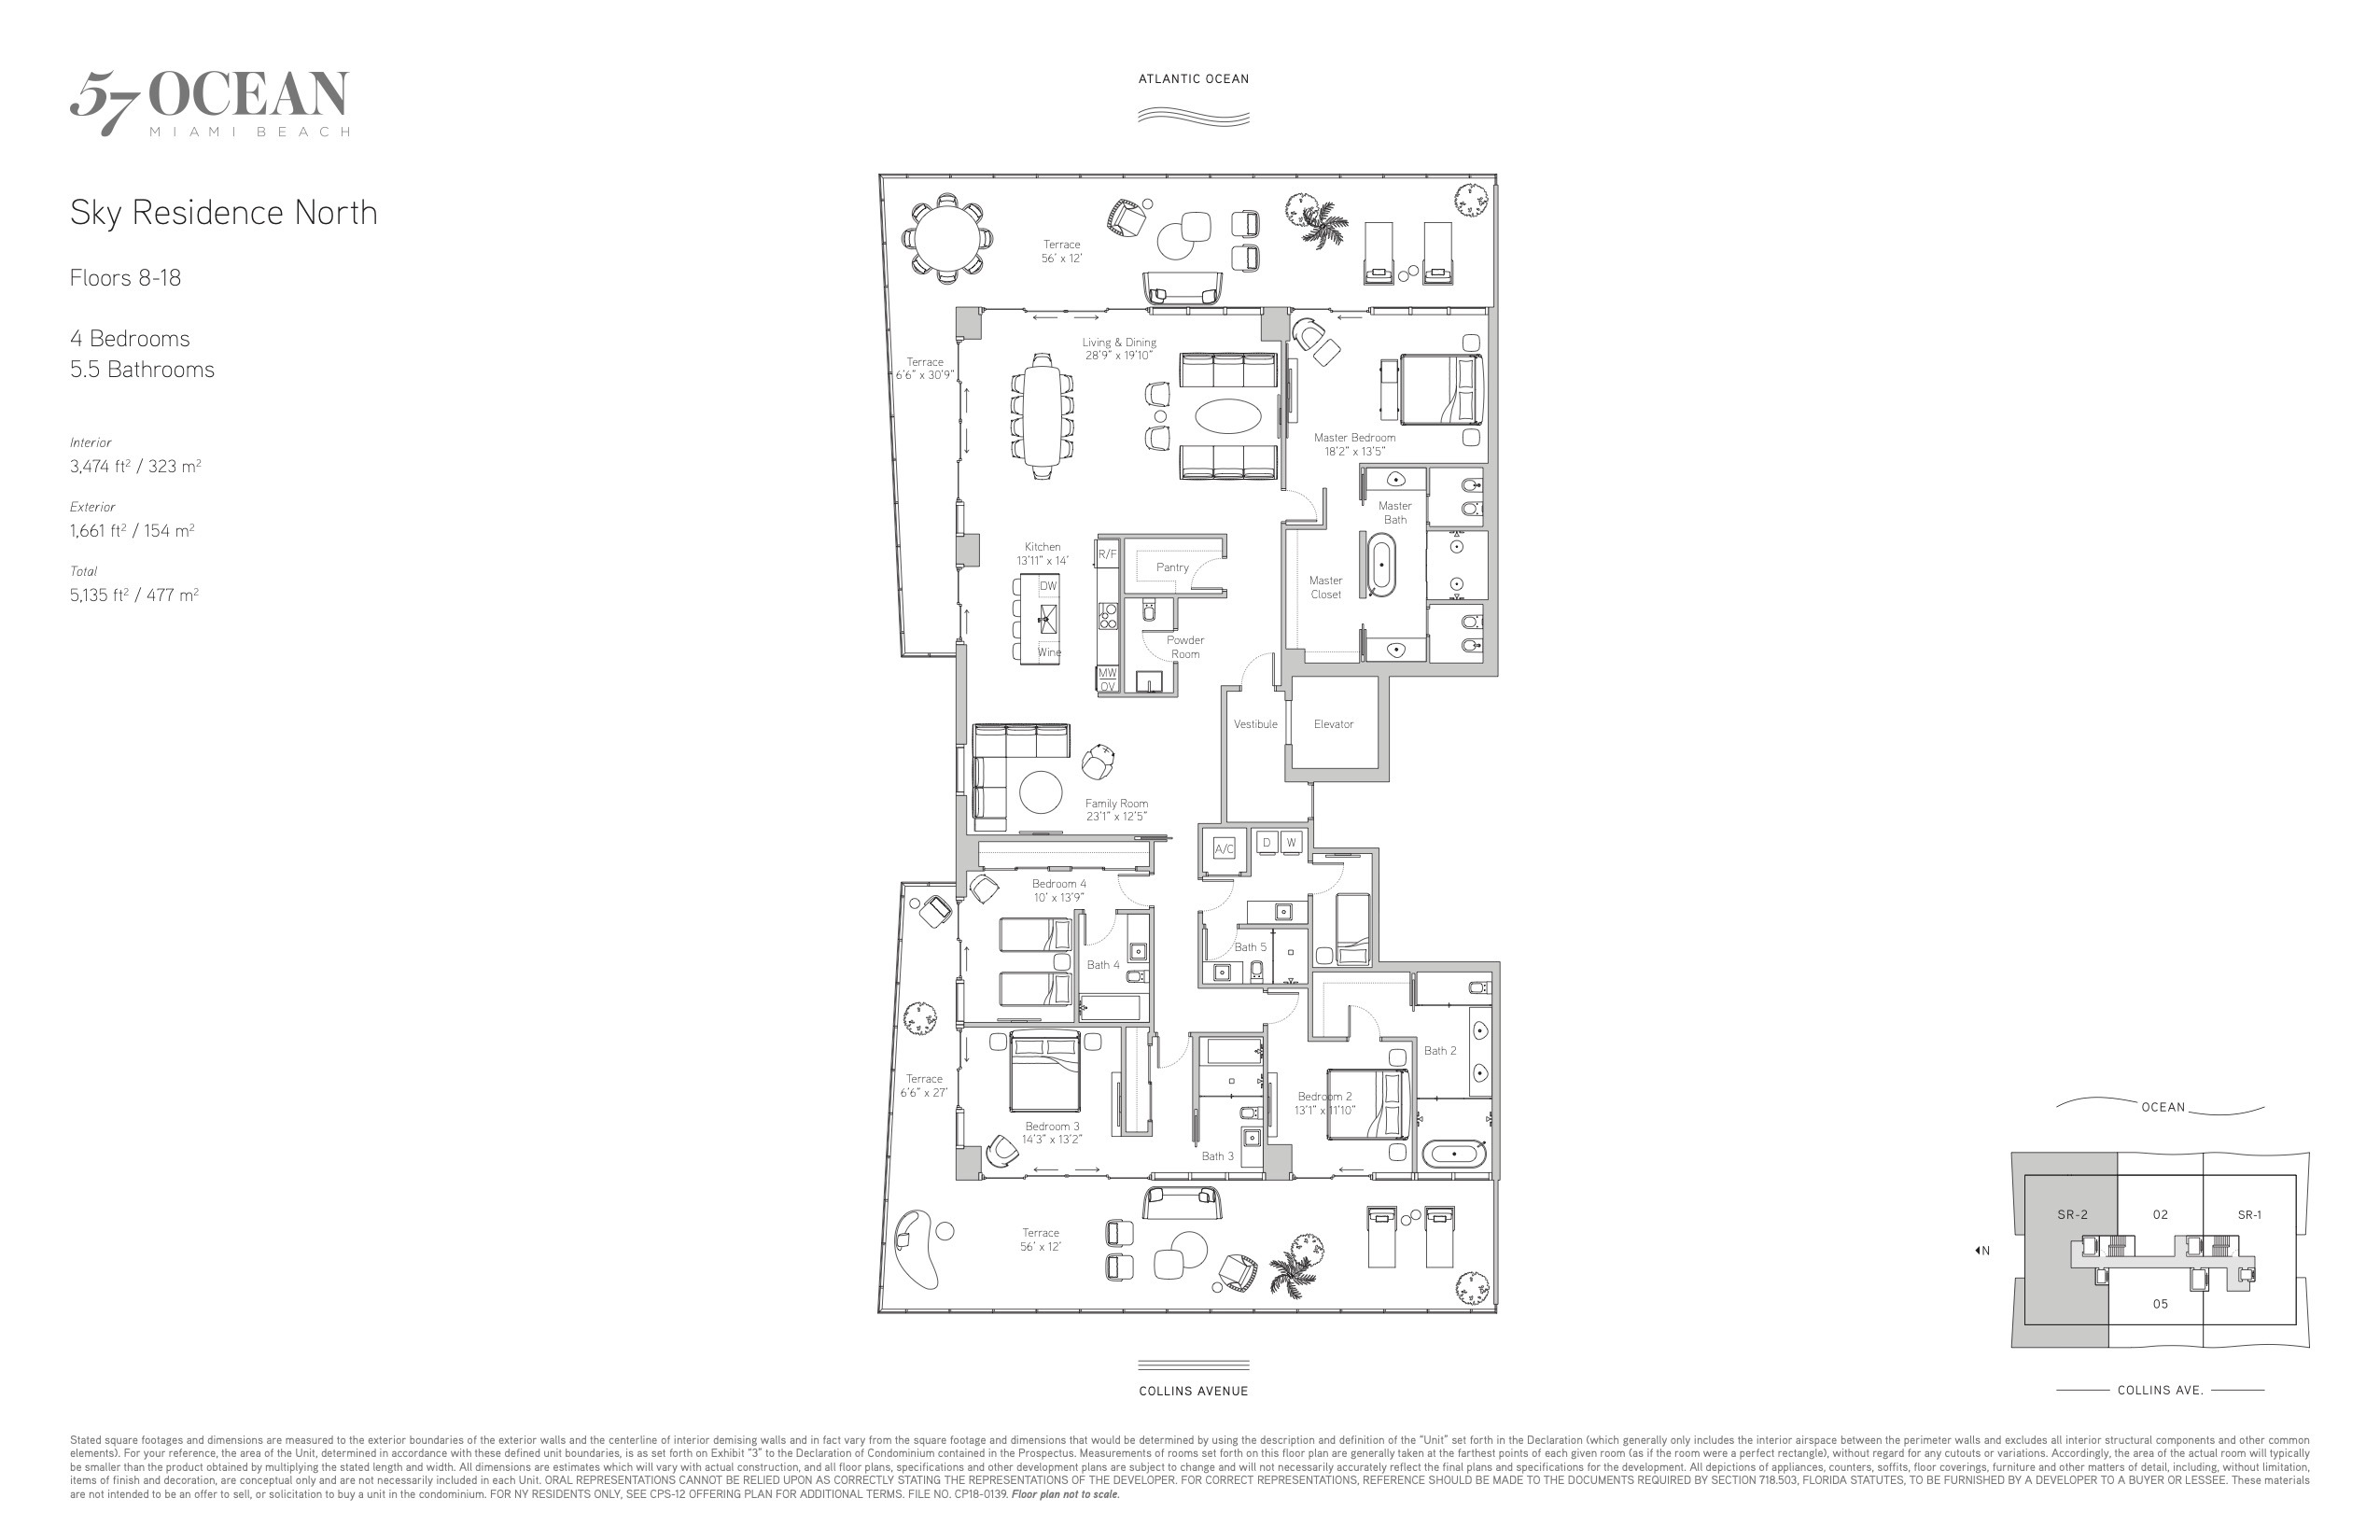 Floor Plan for 57 Ocean Miami Beach Floorplans, Sky Residence North